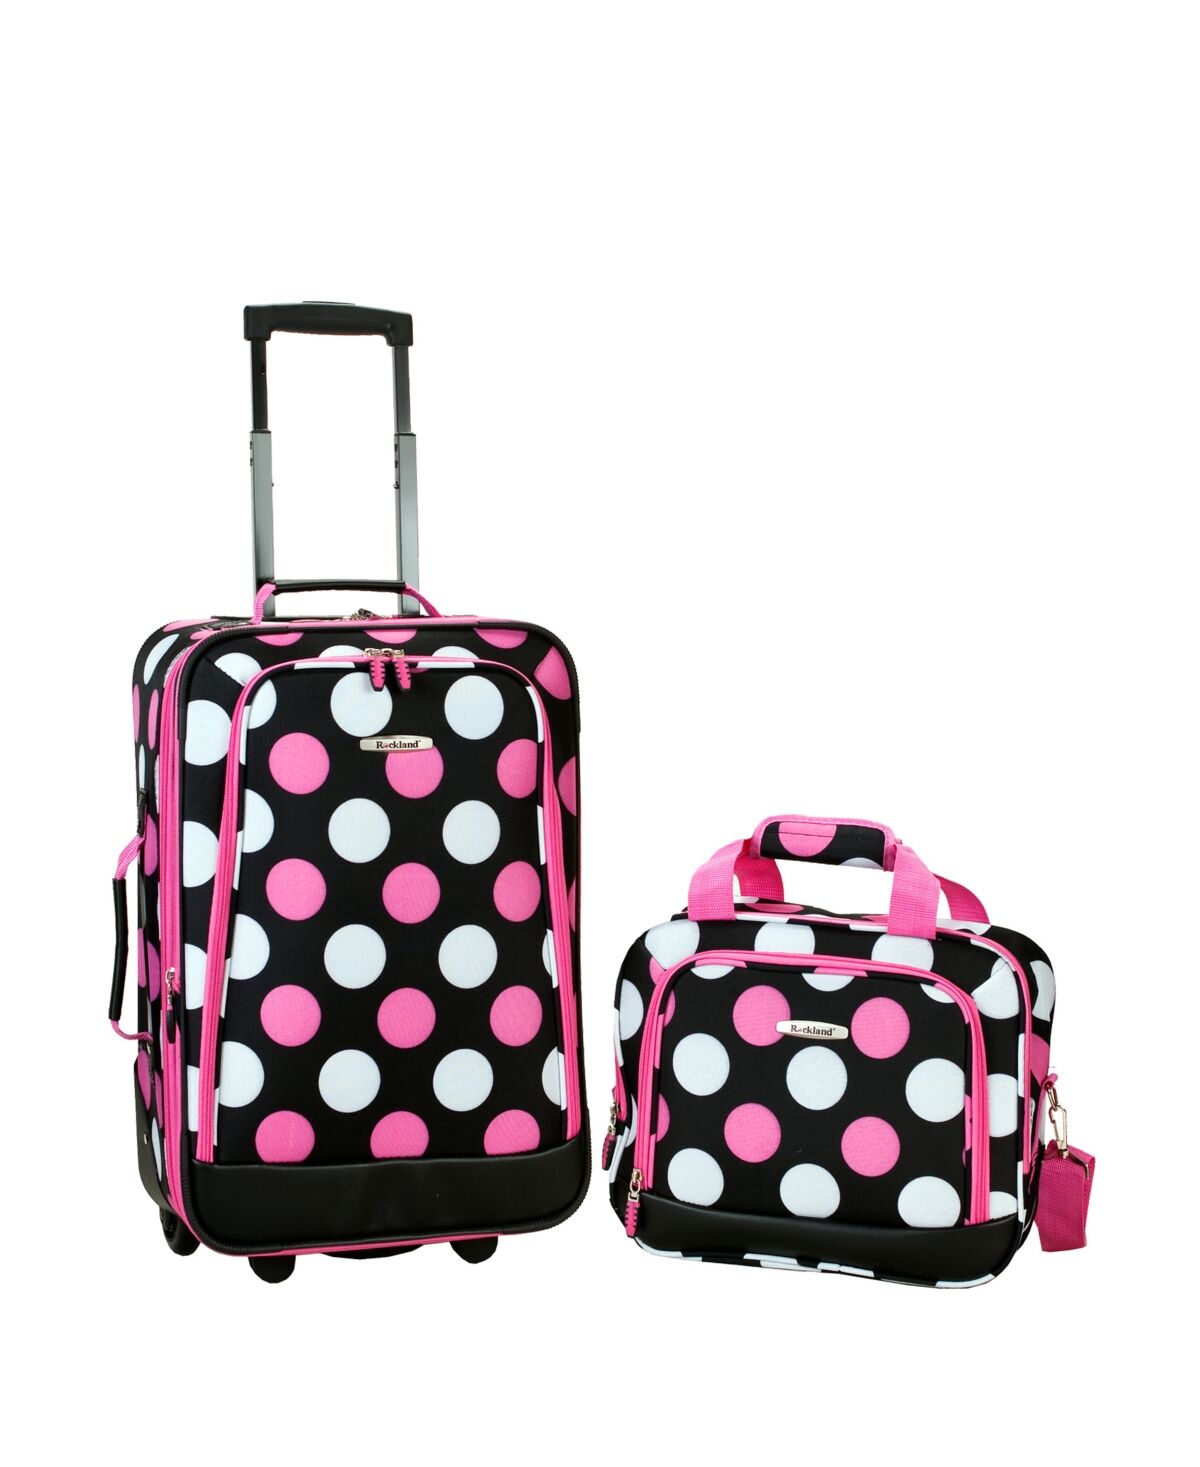 Rockland 2-Pc. Pattern Softside Luggage Set - Pink  White Dots on Black